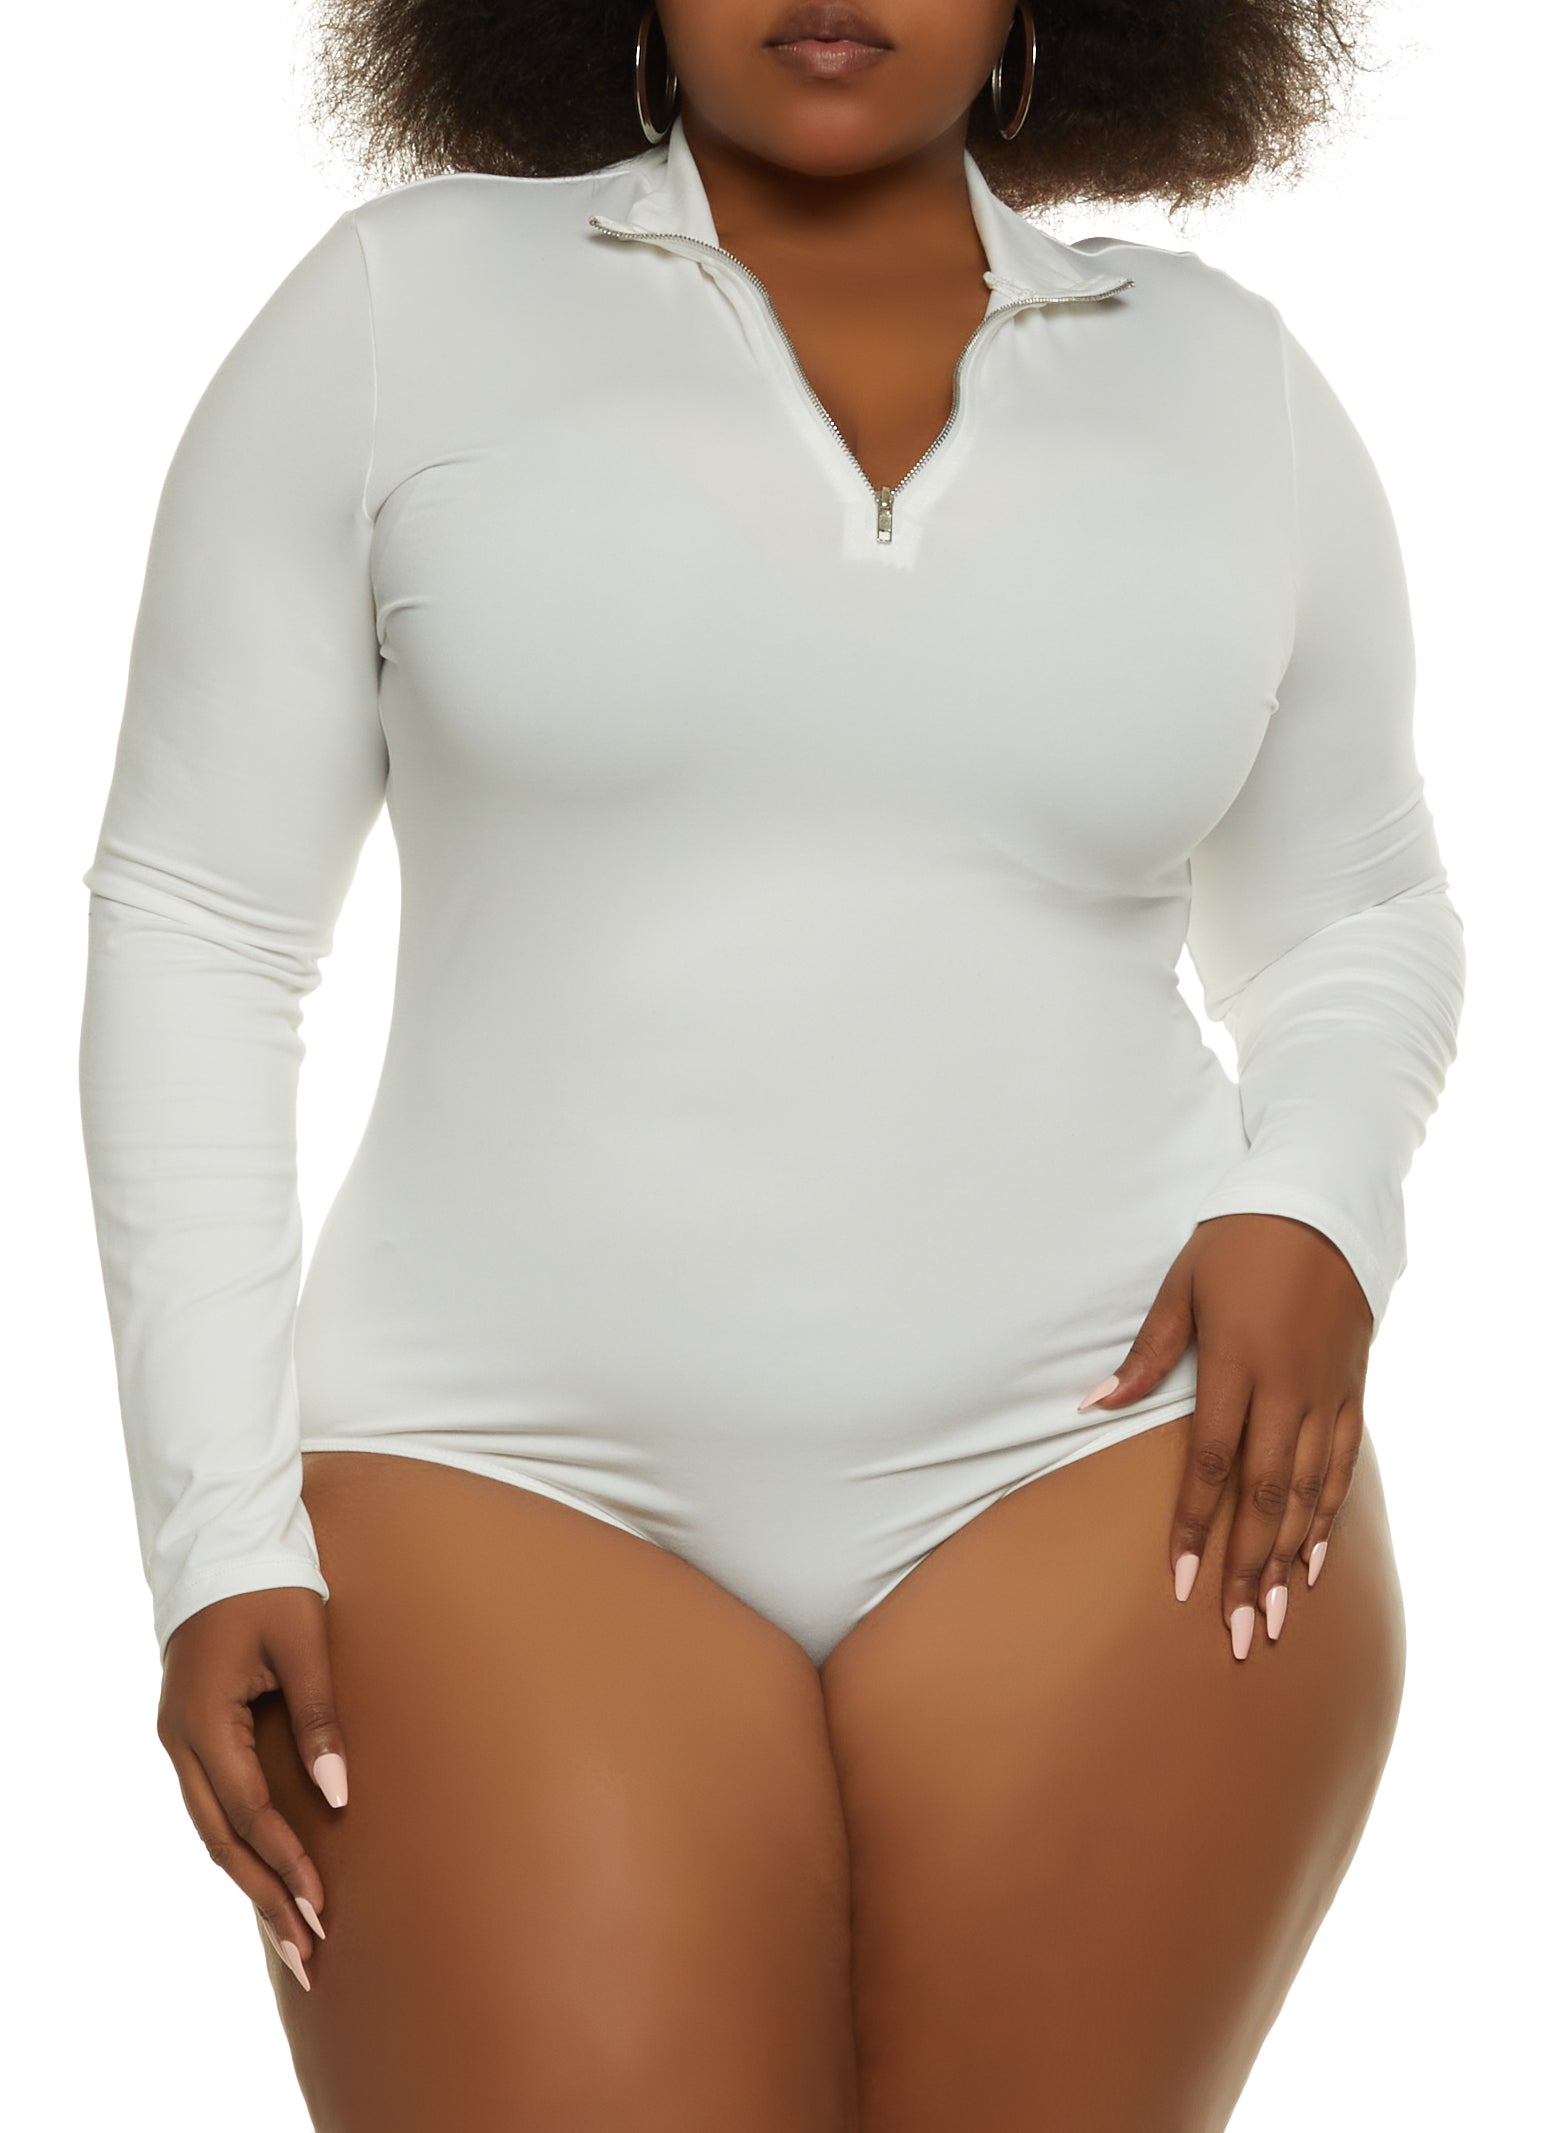 Rainbow Shops Womens Plus Size Zip Neck Long Sleeve Bodysuit, White, Size 3X